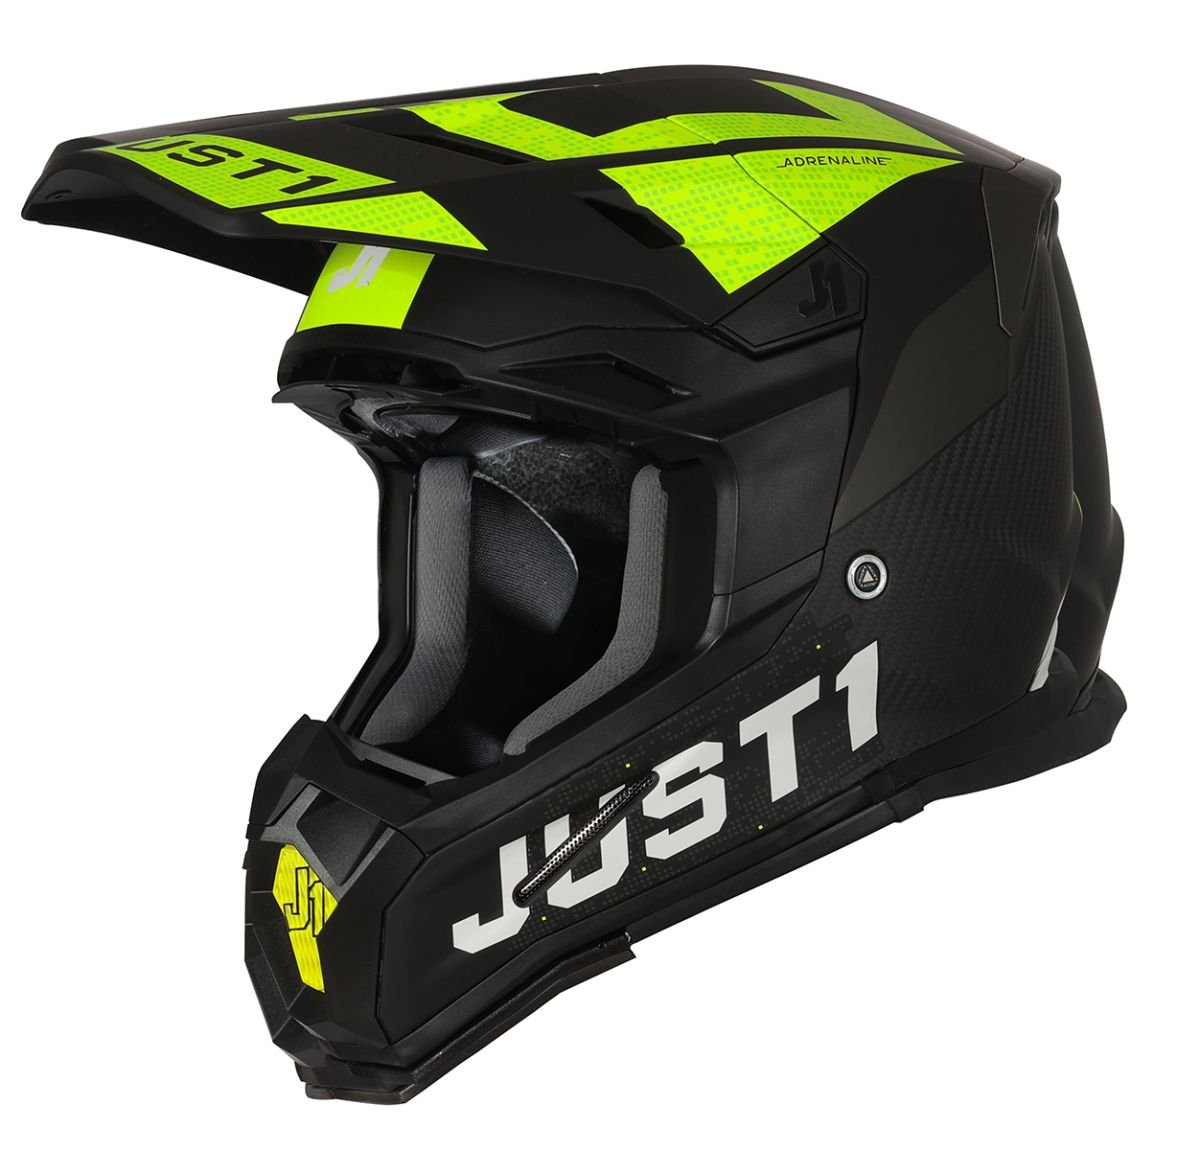 Image of Just1 Helmet J-22 Adrenaline Noir Jaune Fluo Carbon Mat Casque Cross Taille M